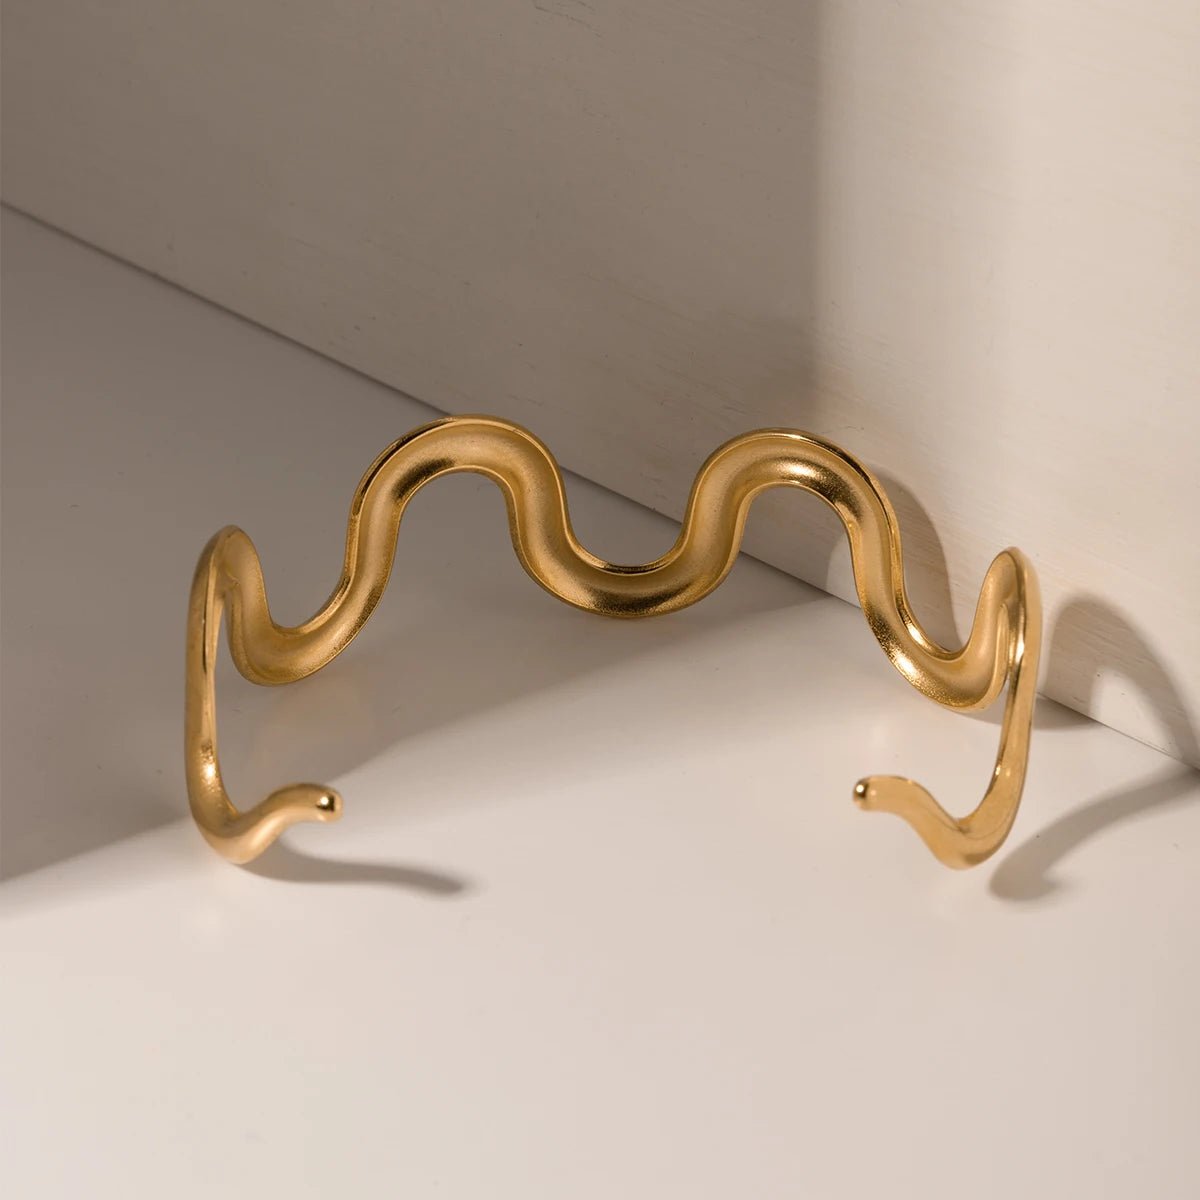 Gold Wavy Statement Bracelet and Necklace - Veinci